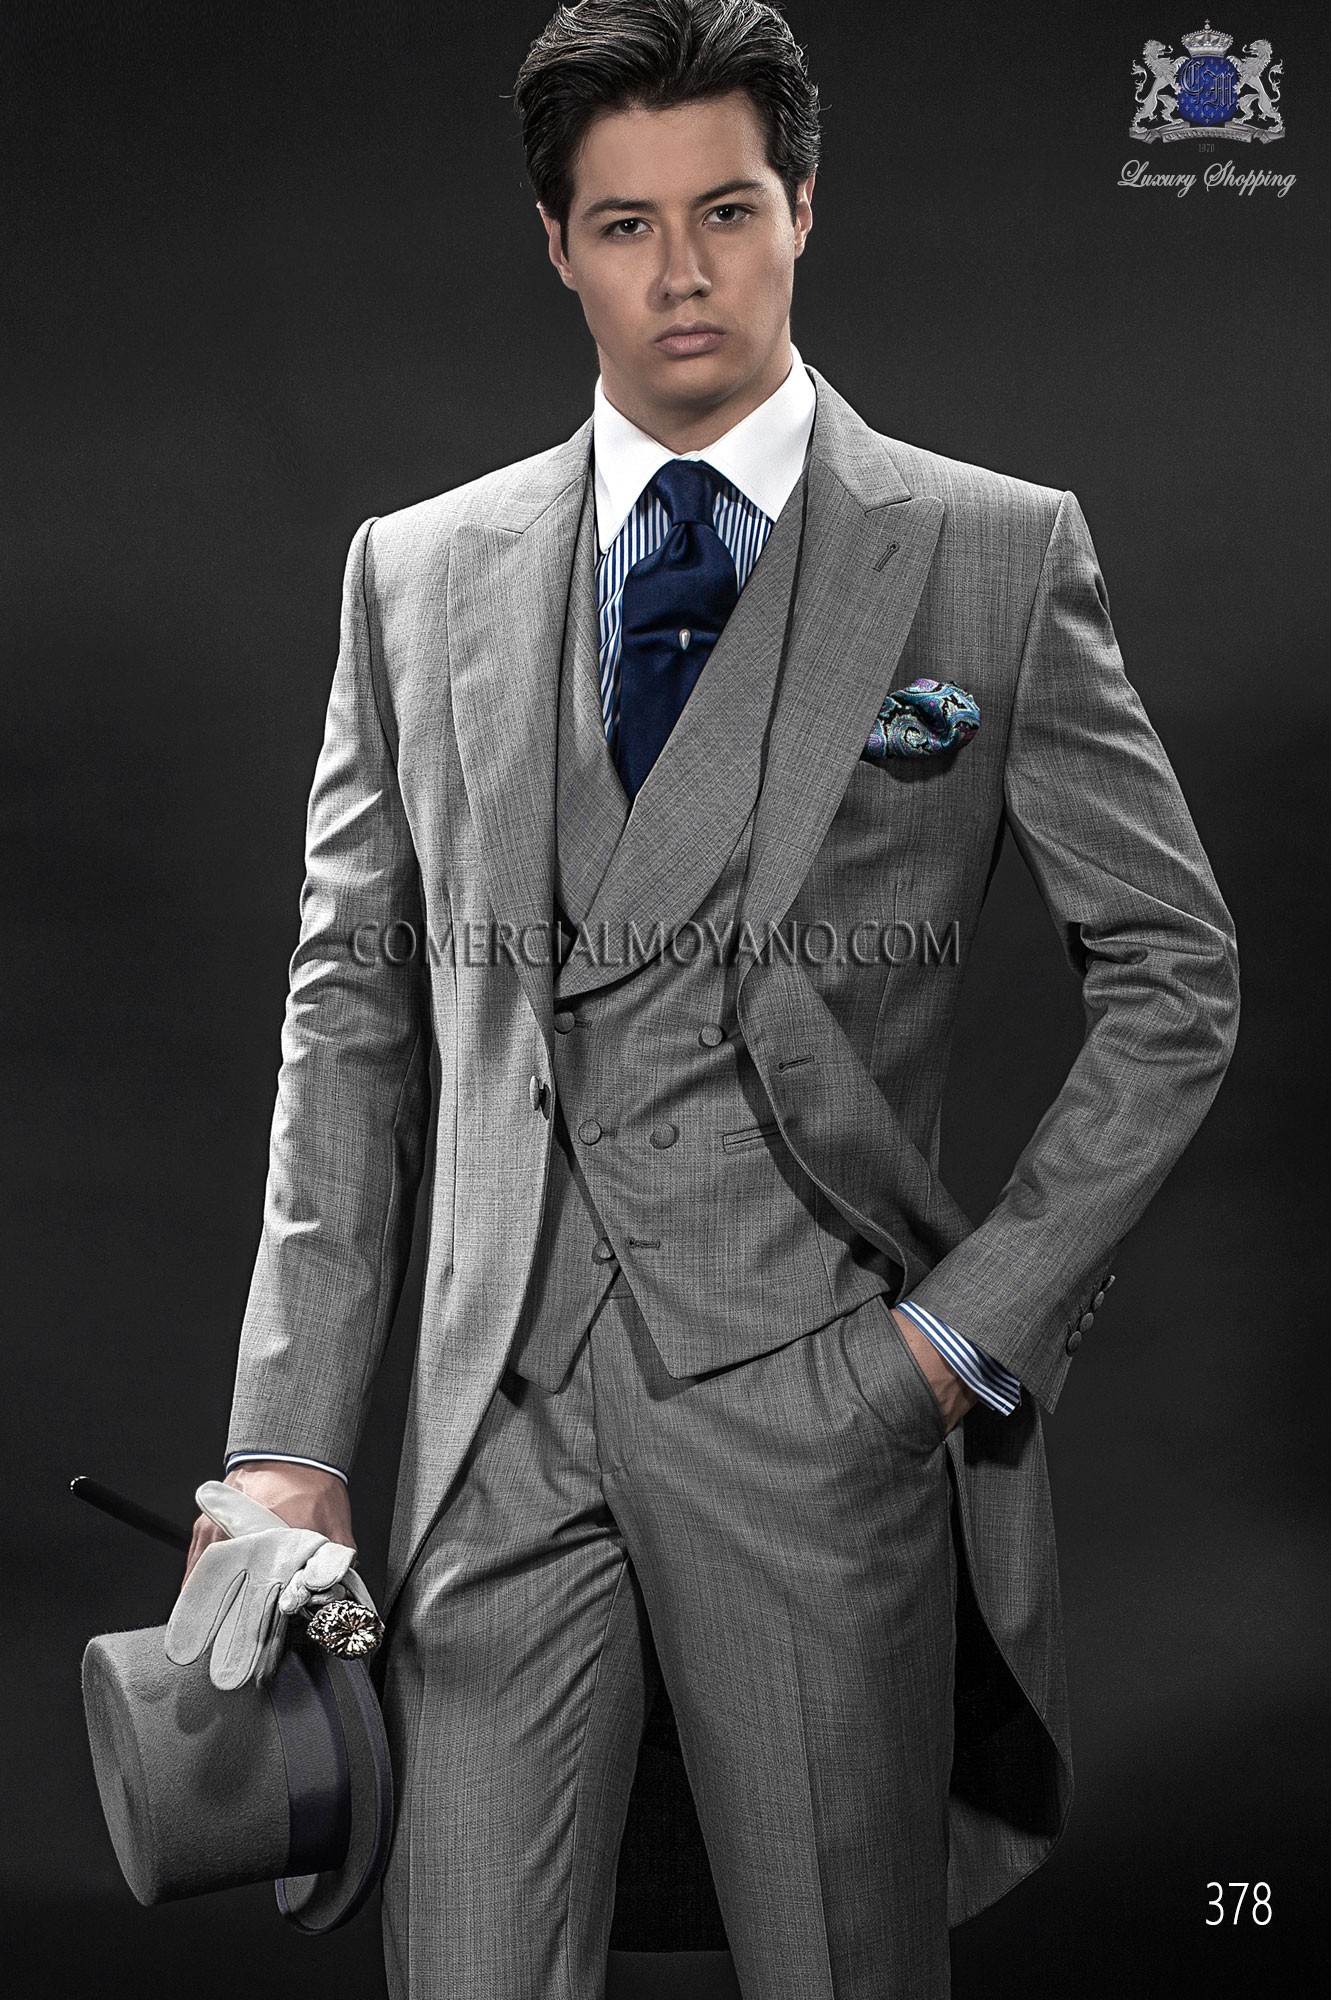 Gentleman grey men wedding suit model 378 Mario Moyano